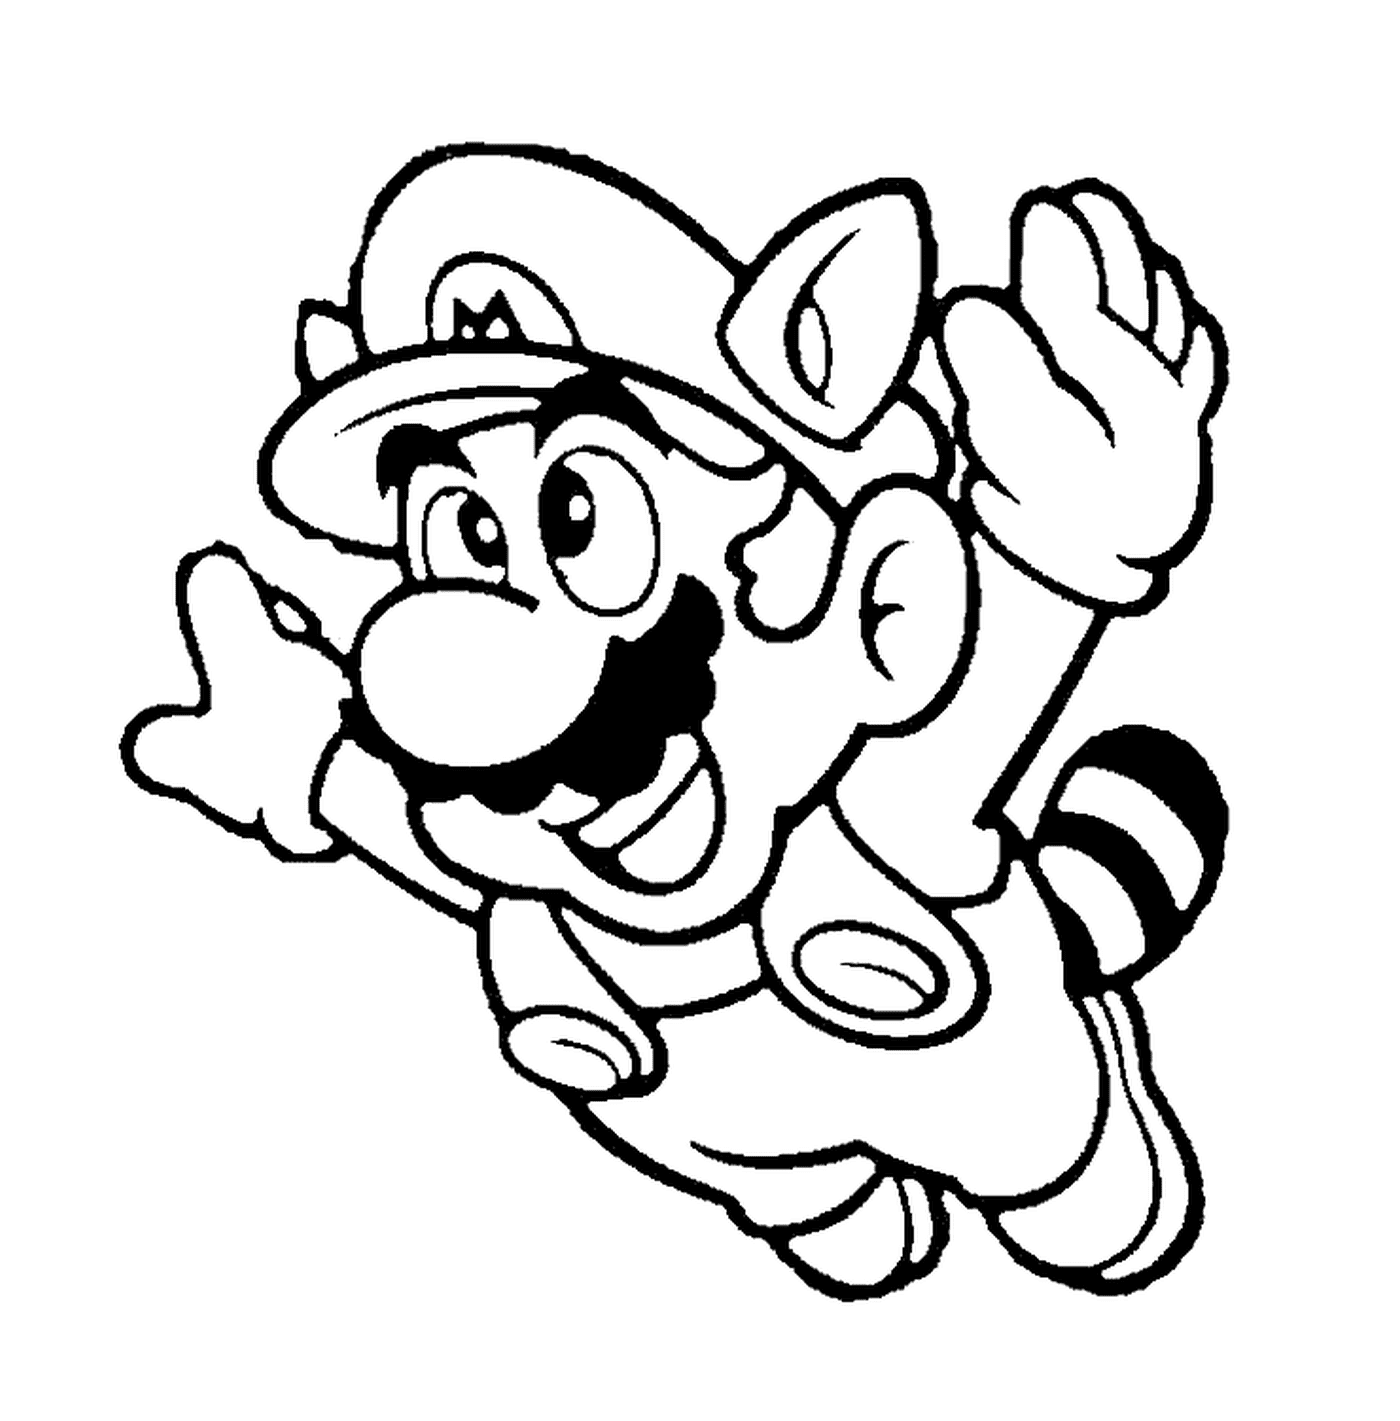 Mario en raton laveur